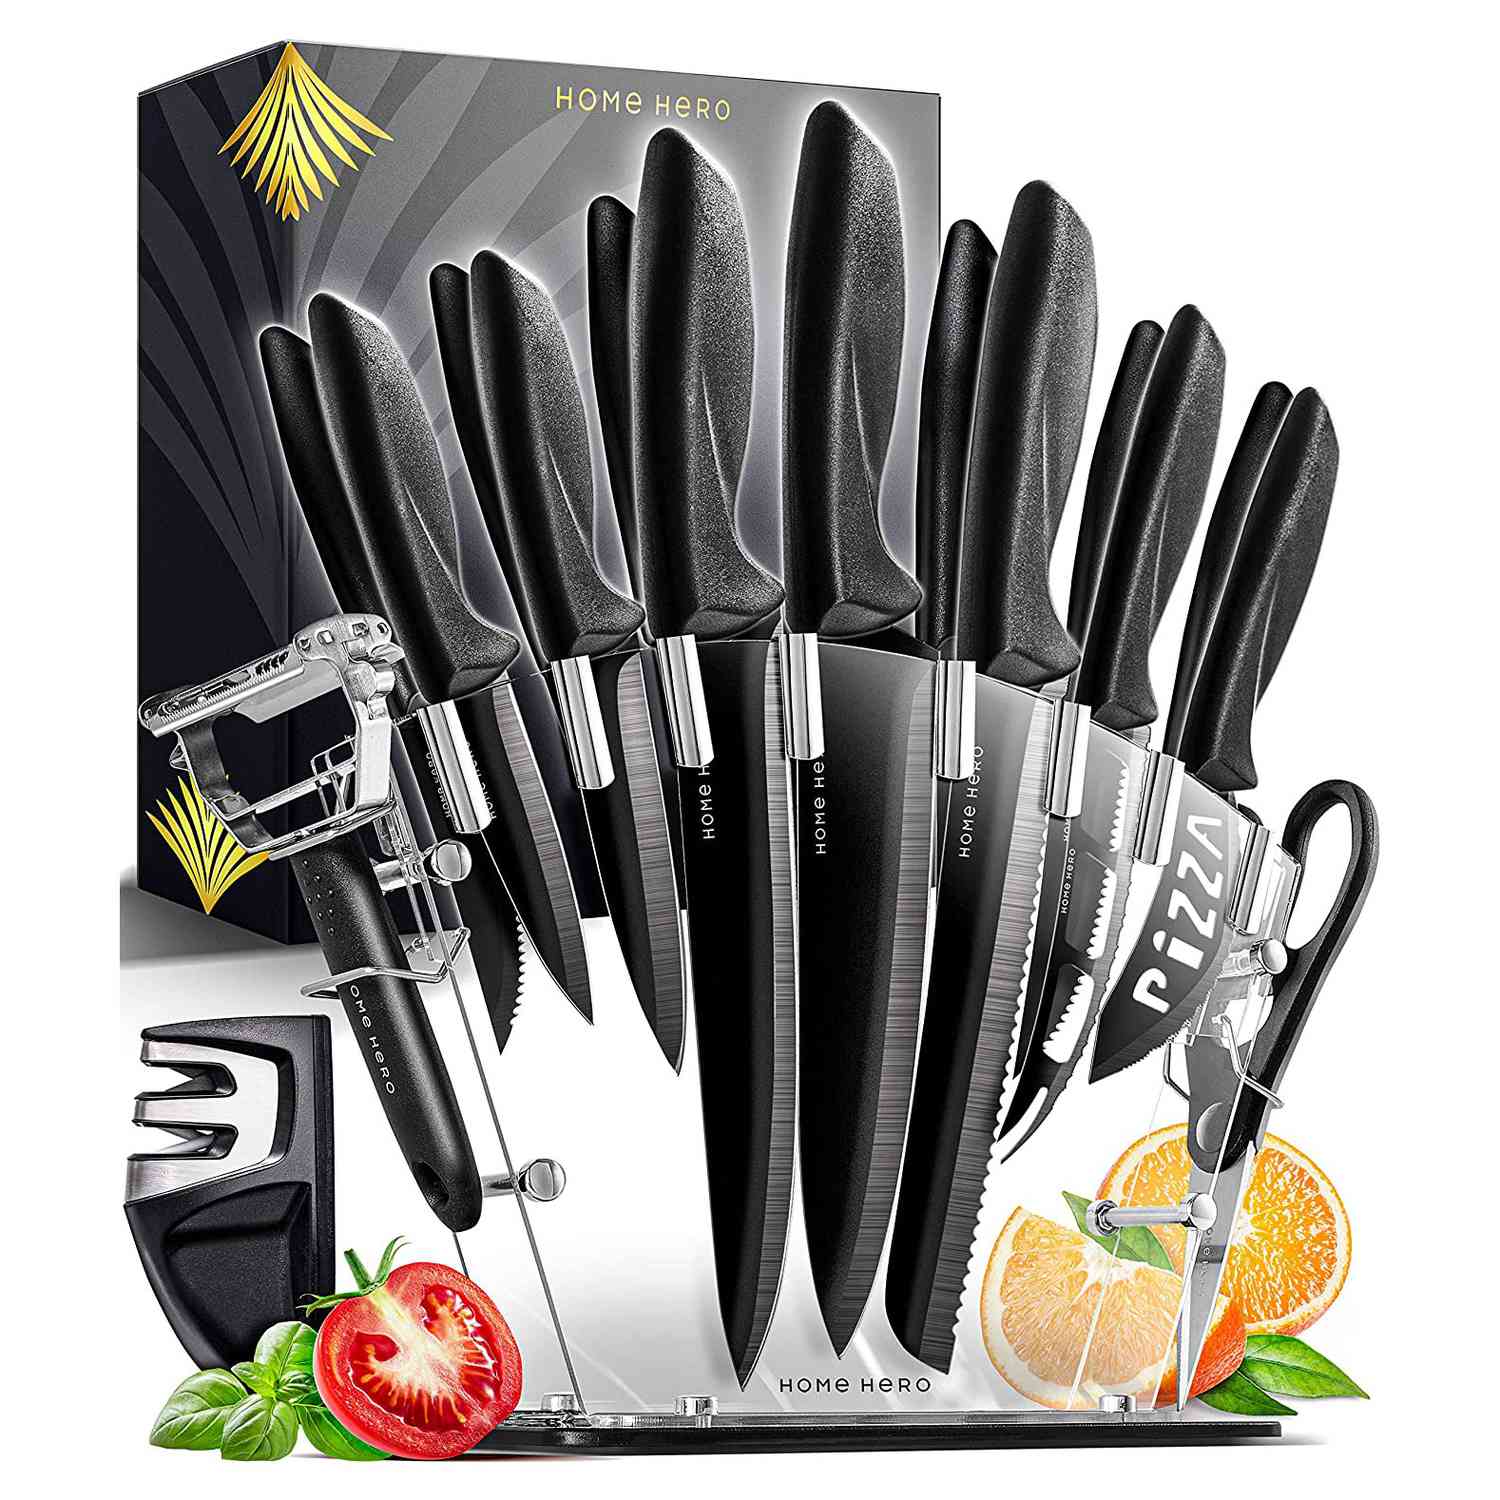 Set of black knifes with knife sharpener in front of black box